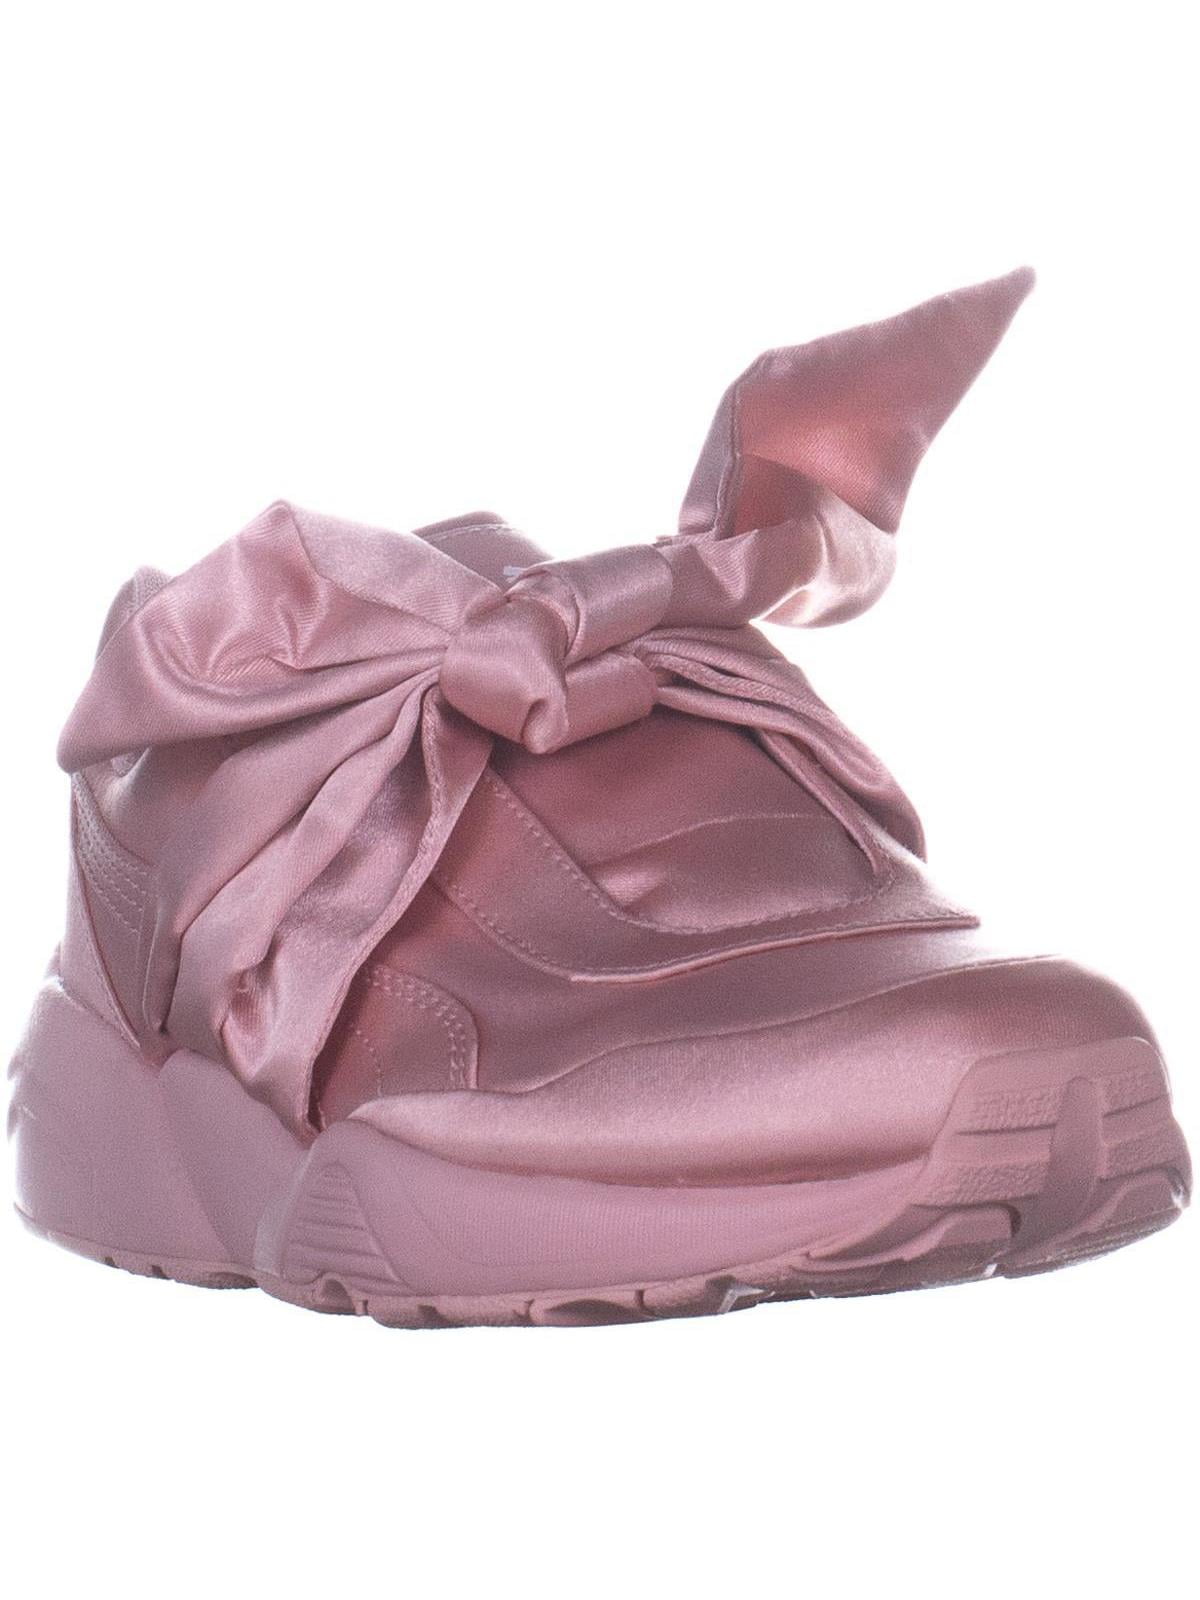 Puma Fenty Bow Sneaker Slip On Fashion Sneakers, Silver Pink/Silver Pink, US 35.5 EU - Walmart.com